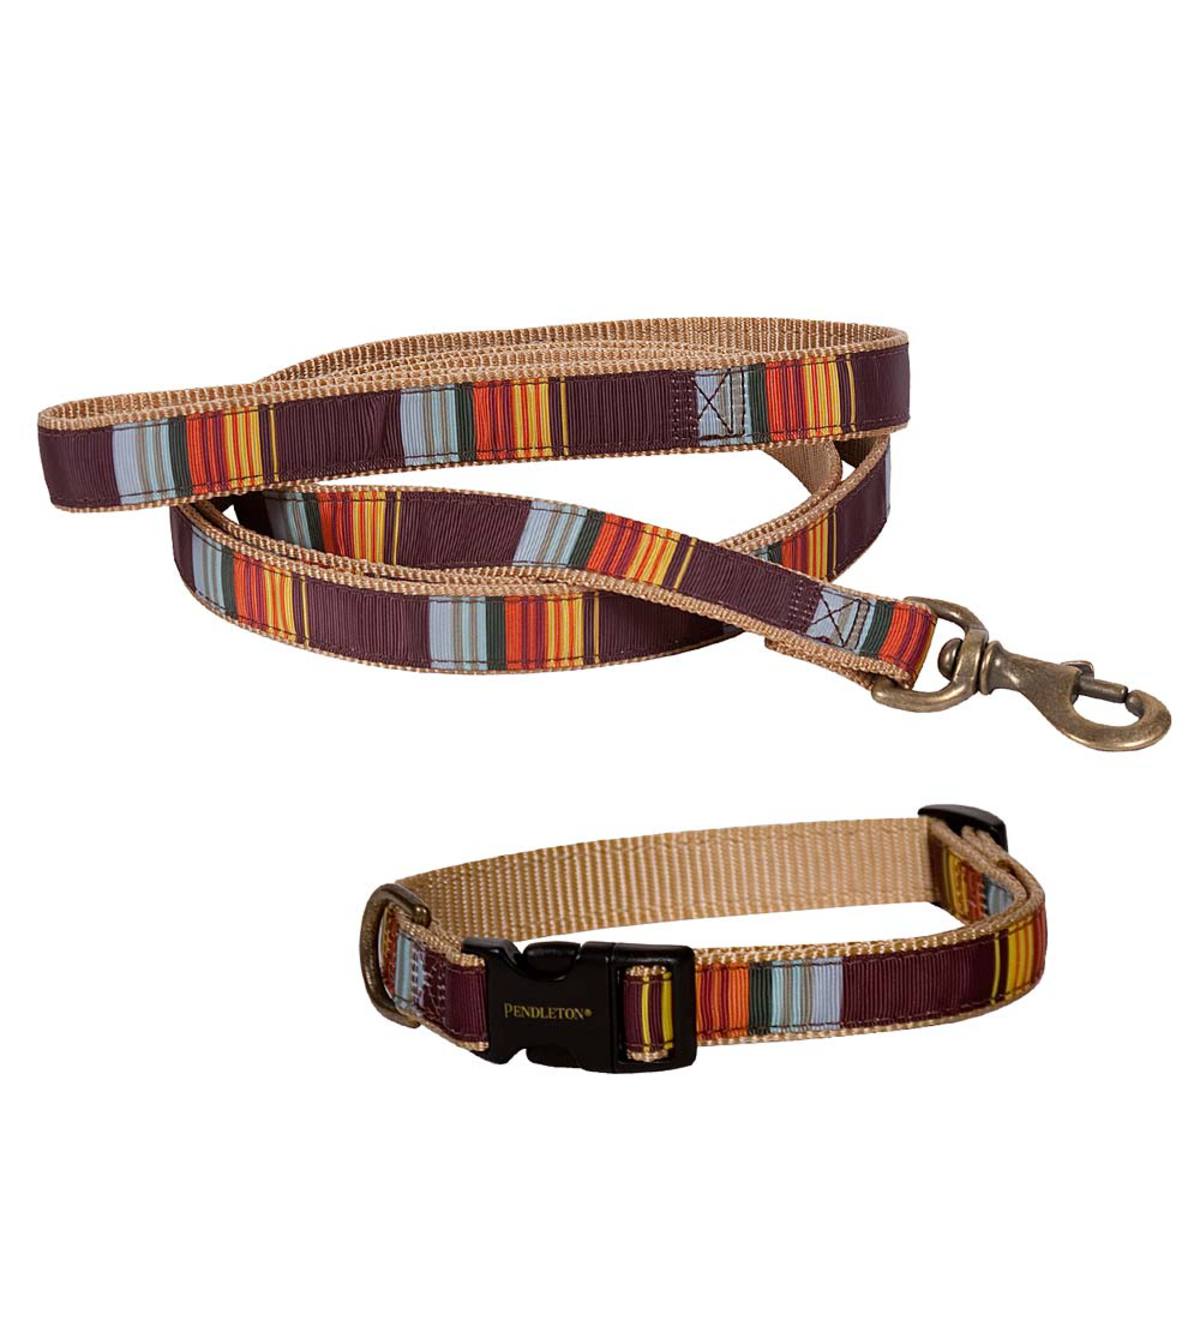 Smokey Mountain Hiker Dog Collar